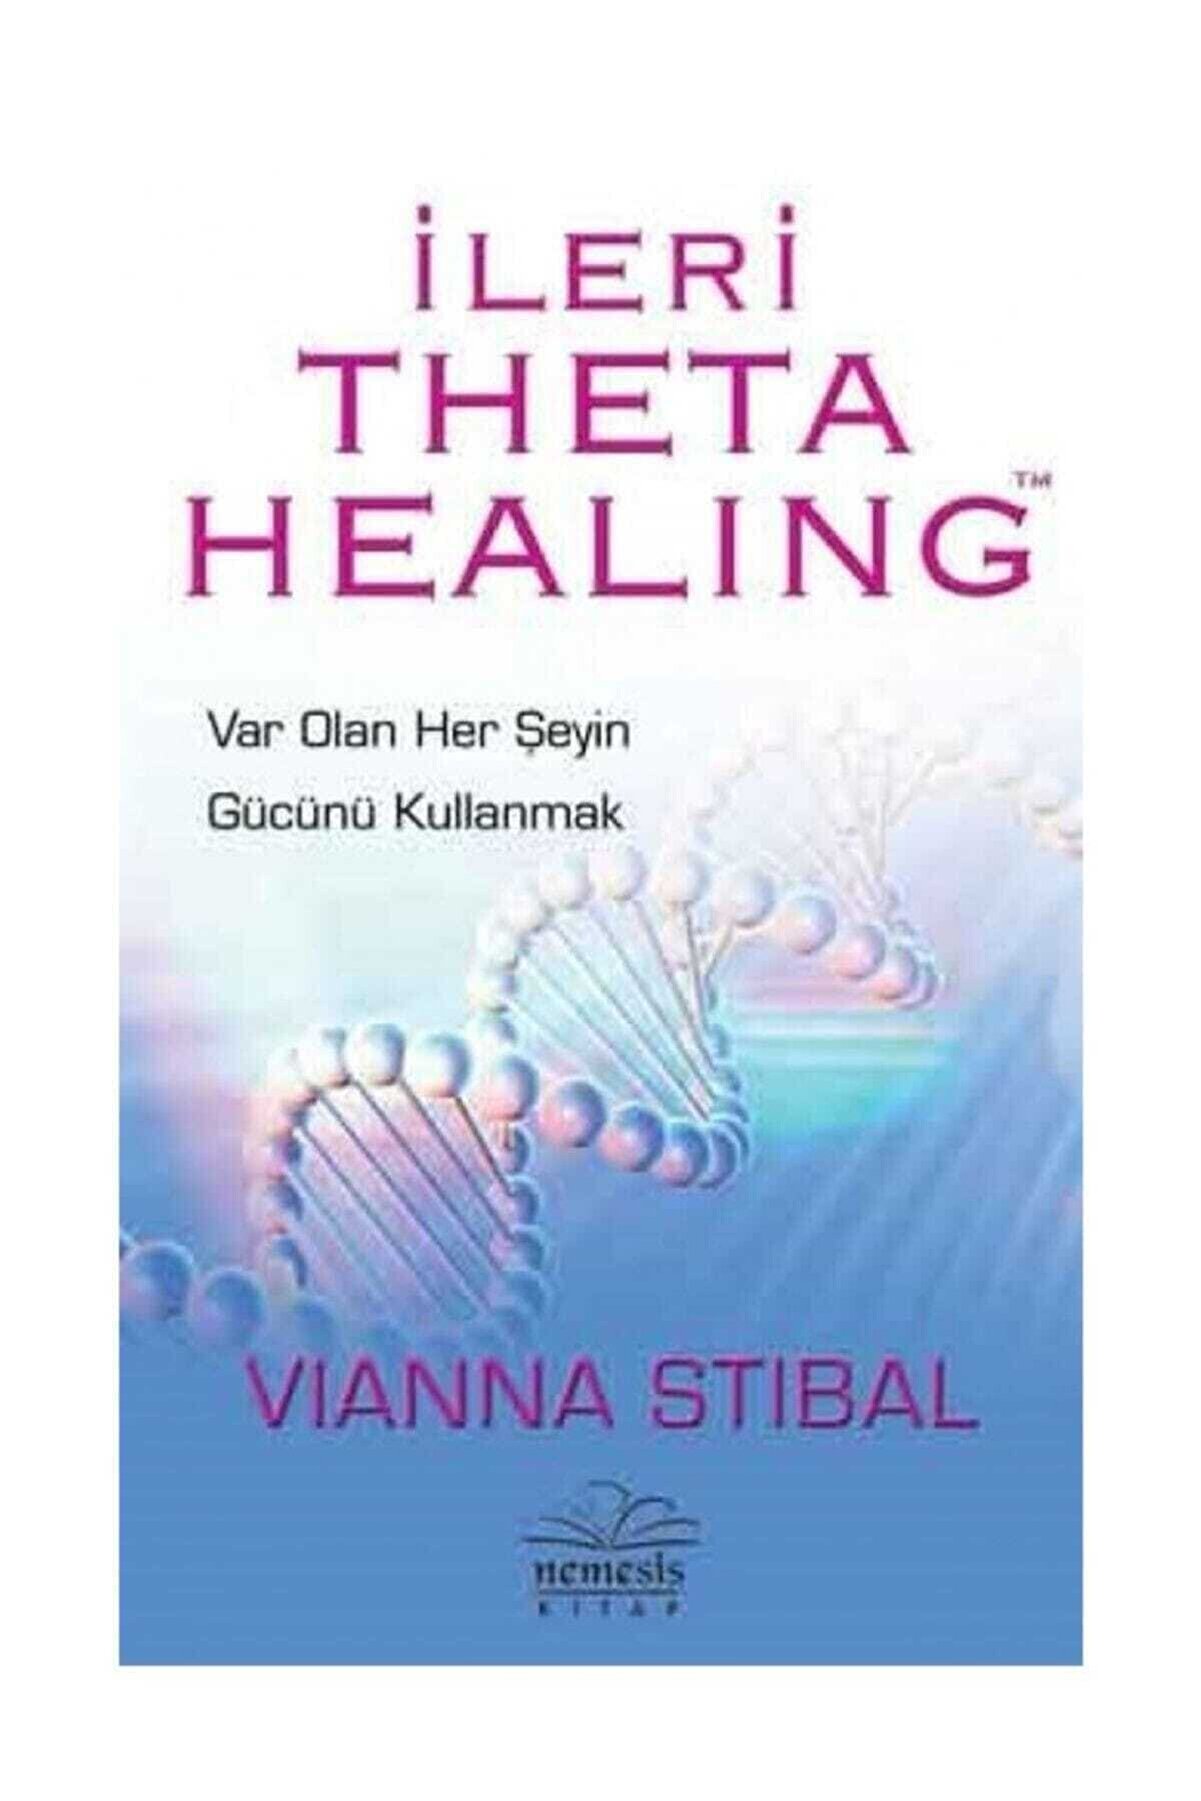 Nemesis Kitap İleri Theta Healing